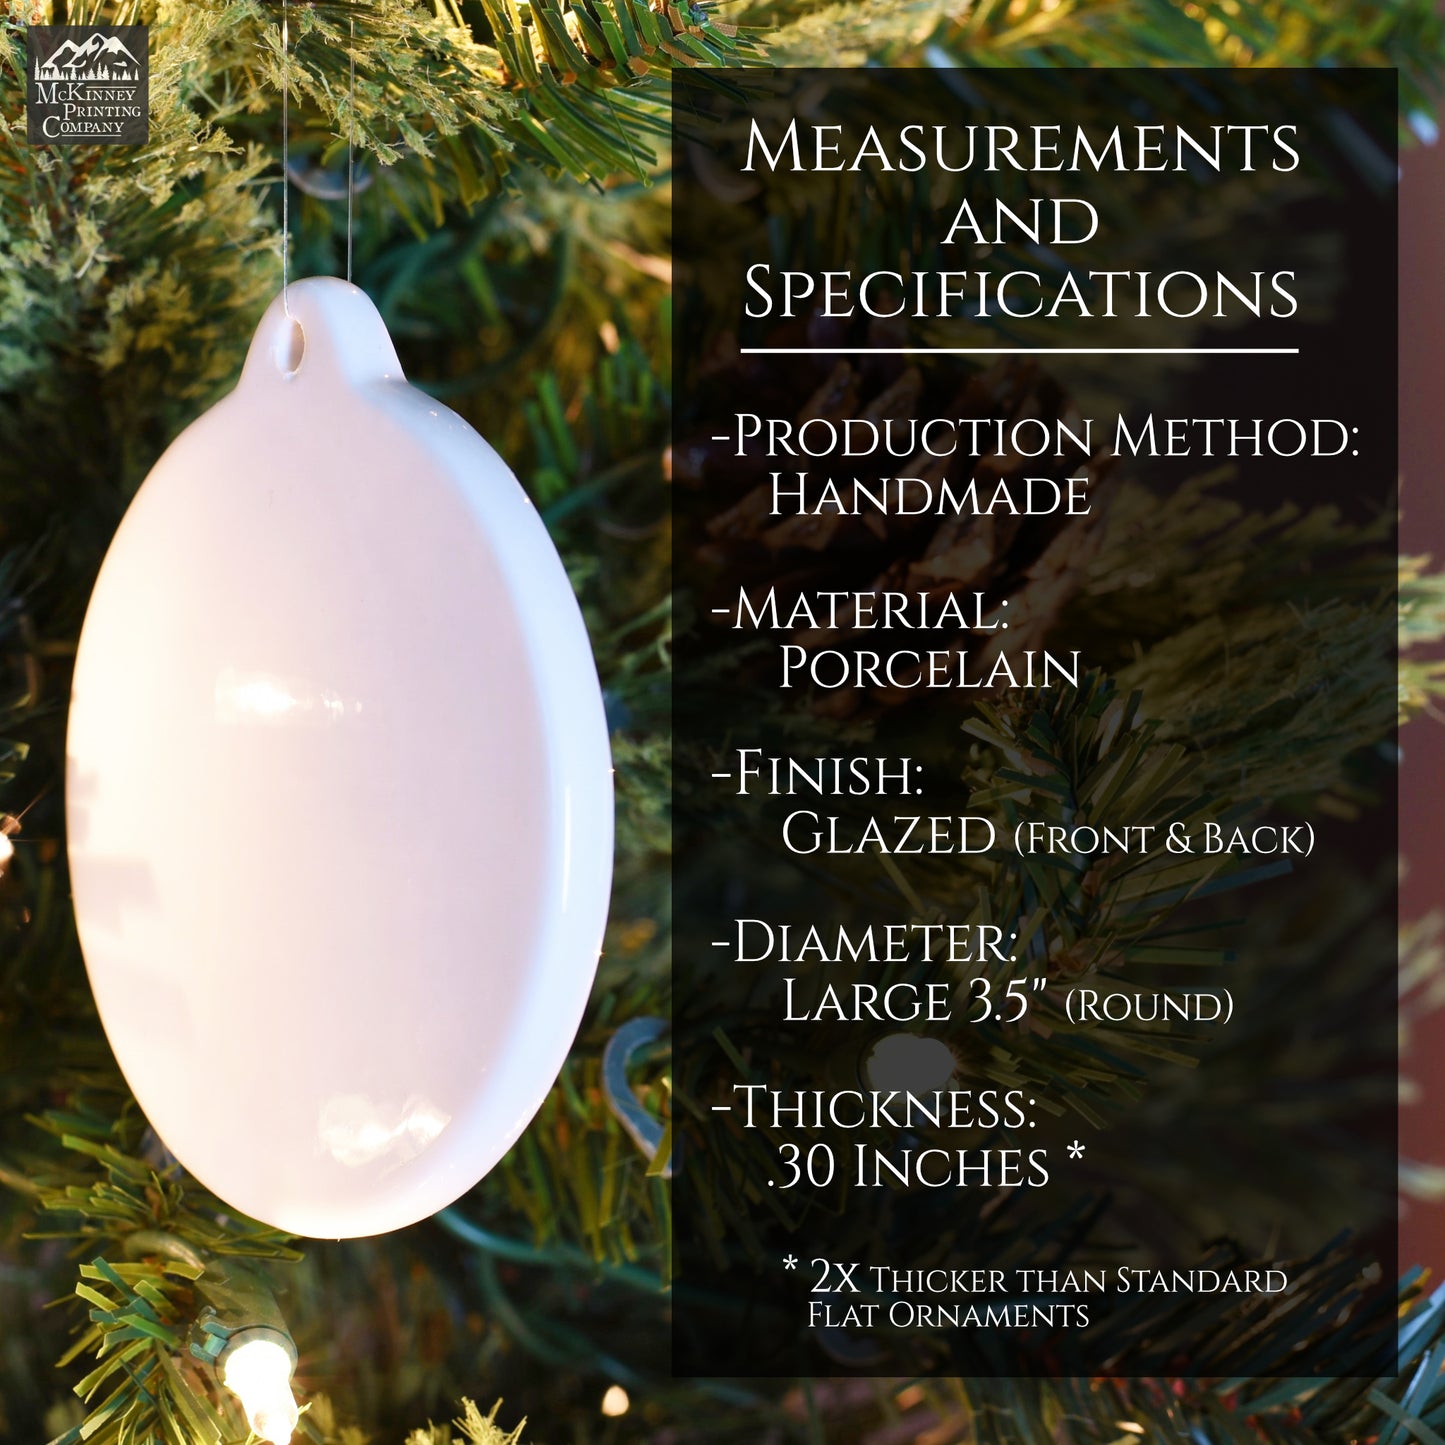 Decoracion Navidad - Christmas Ornament, Feliz Navidad, Custom